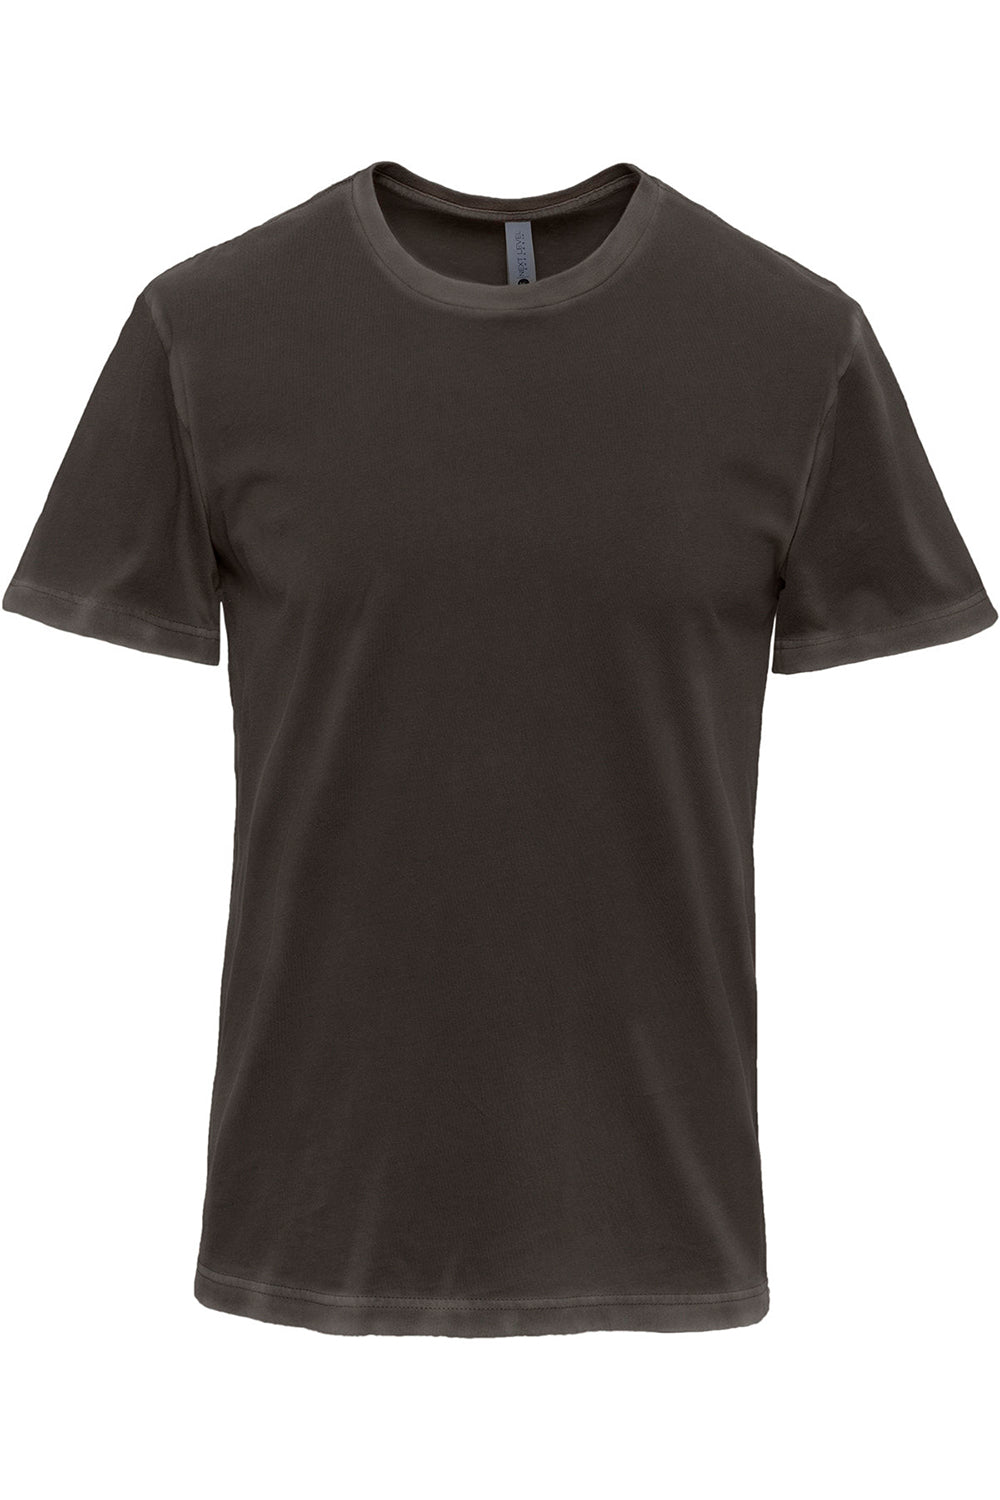 Next Level 3600SW Mens Soft Wash Short Sleeve Crewneck T-Shirt Graphite Black Flat Front